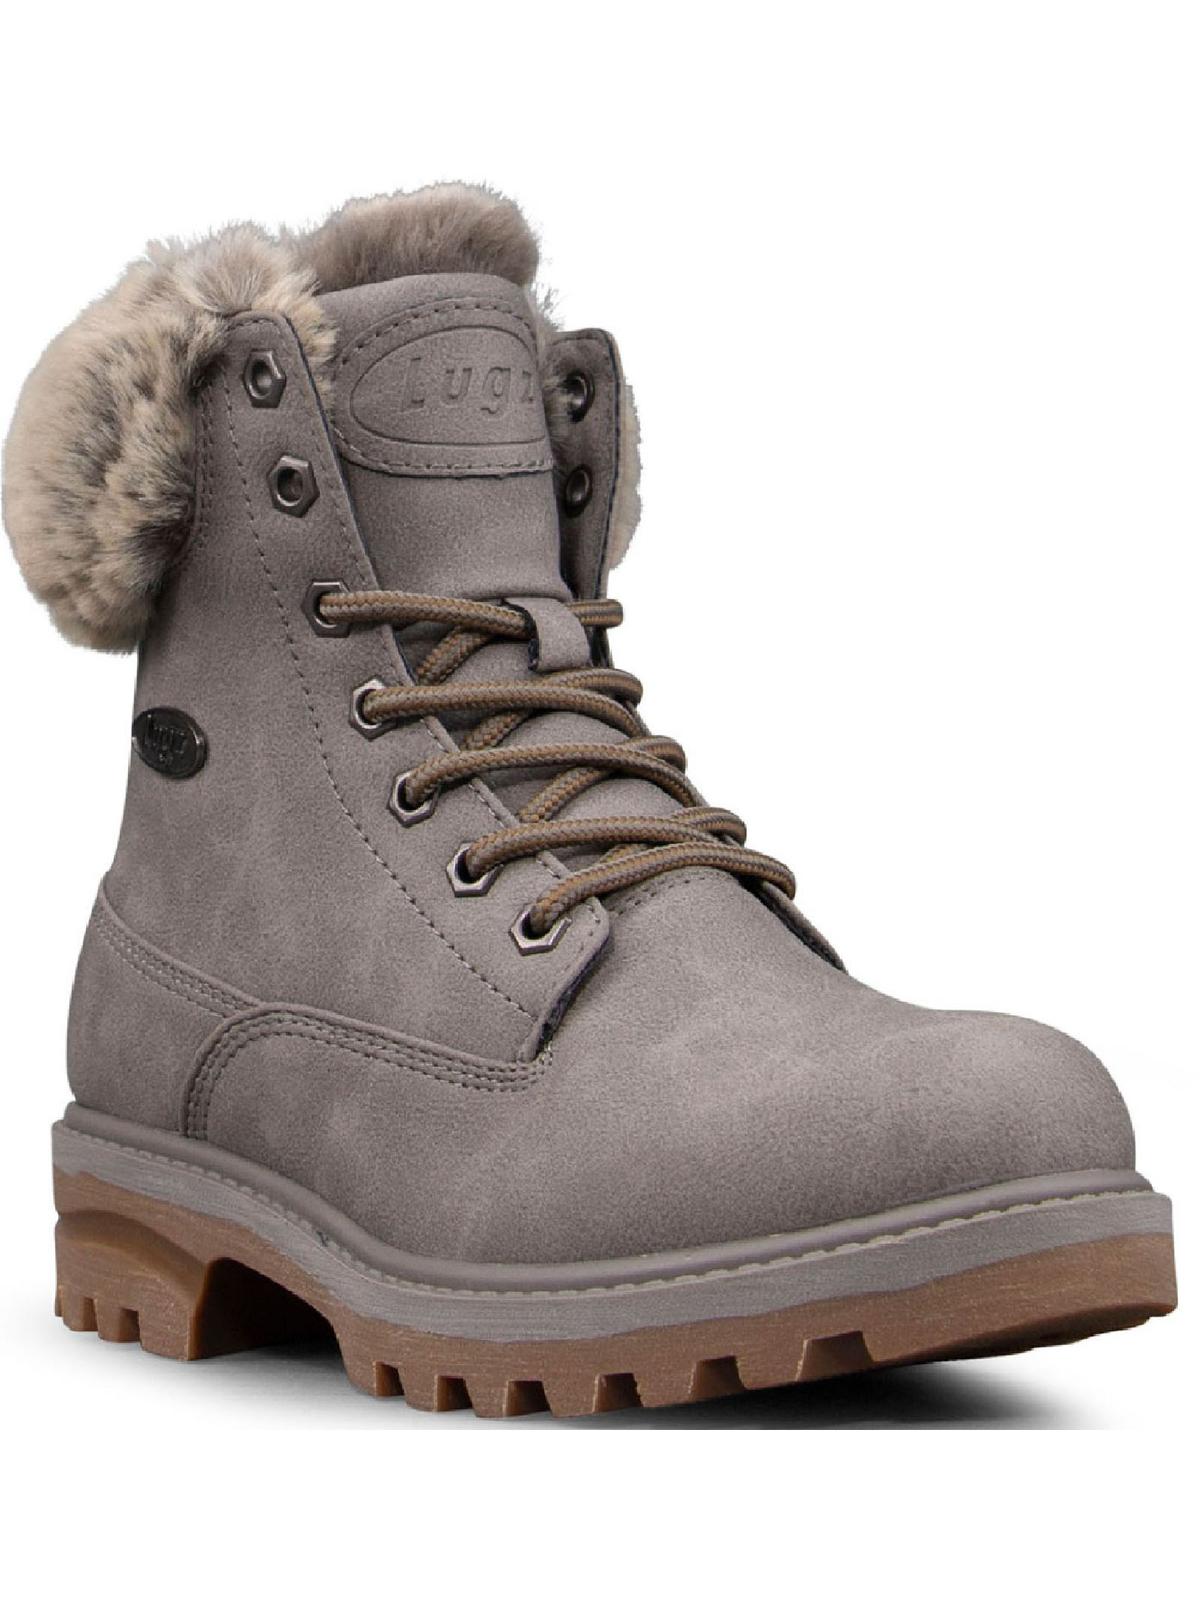 LUGZ Empire HI Womens Faux Leather Slip Resistant Winter Boots